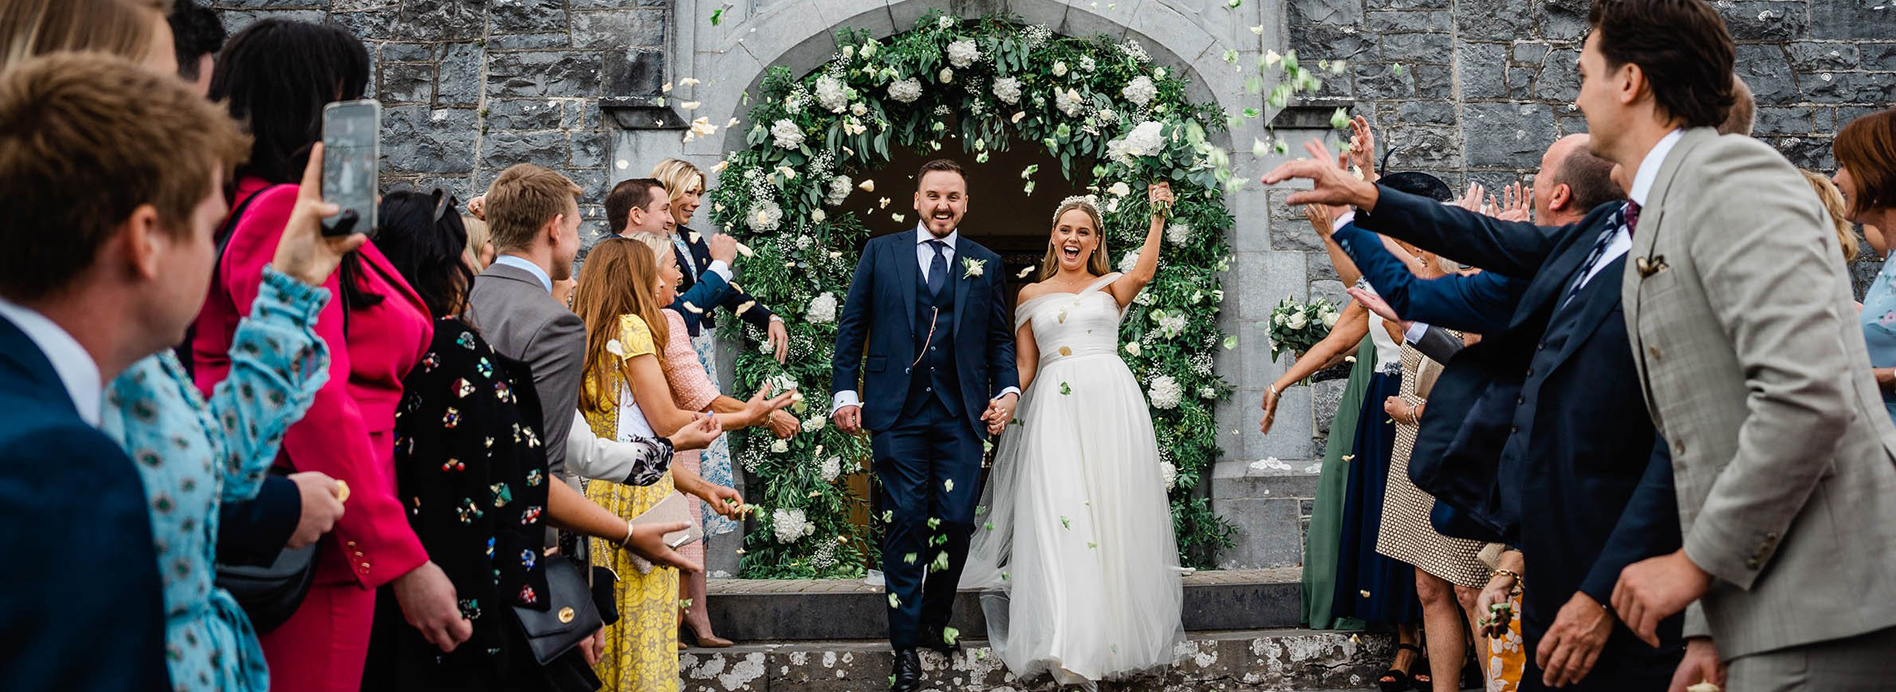 My Big Day - Wedding Suppliers Ireland - Wedding Venues Ireland Carousel Slider